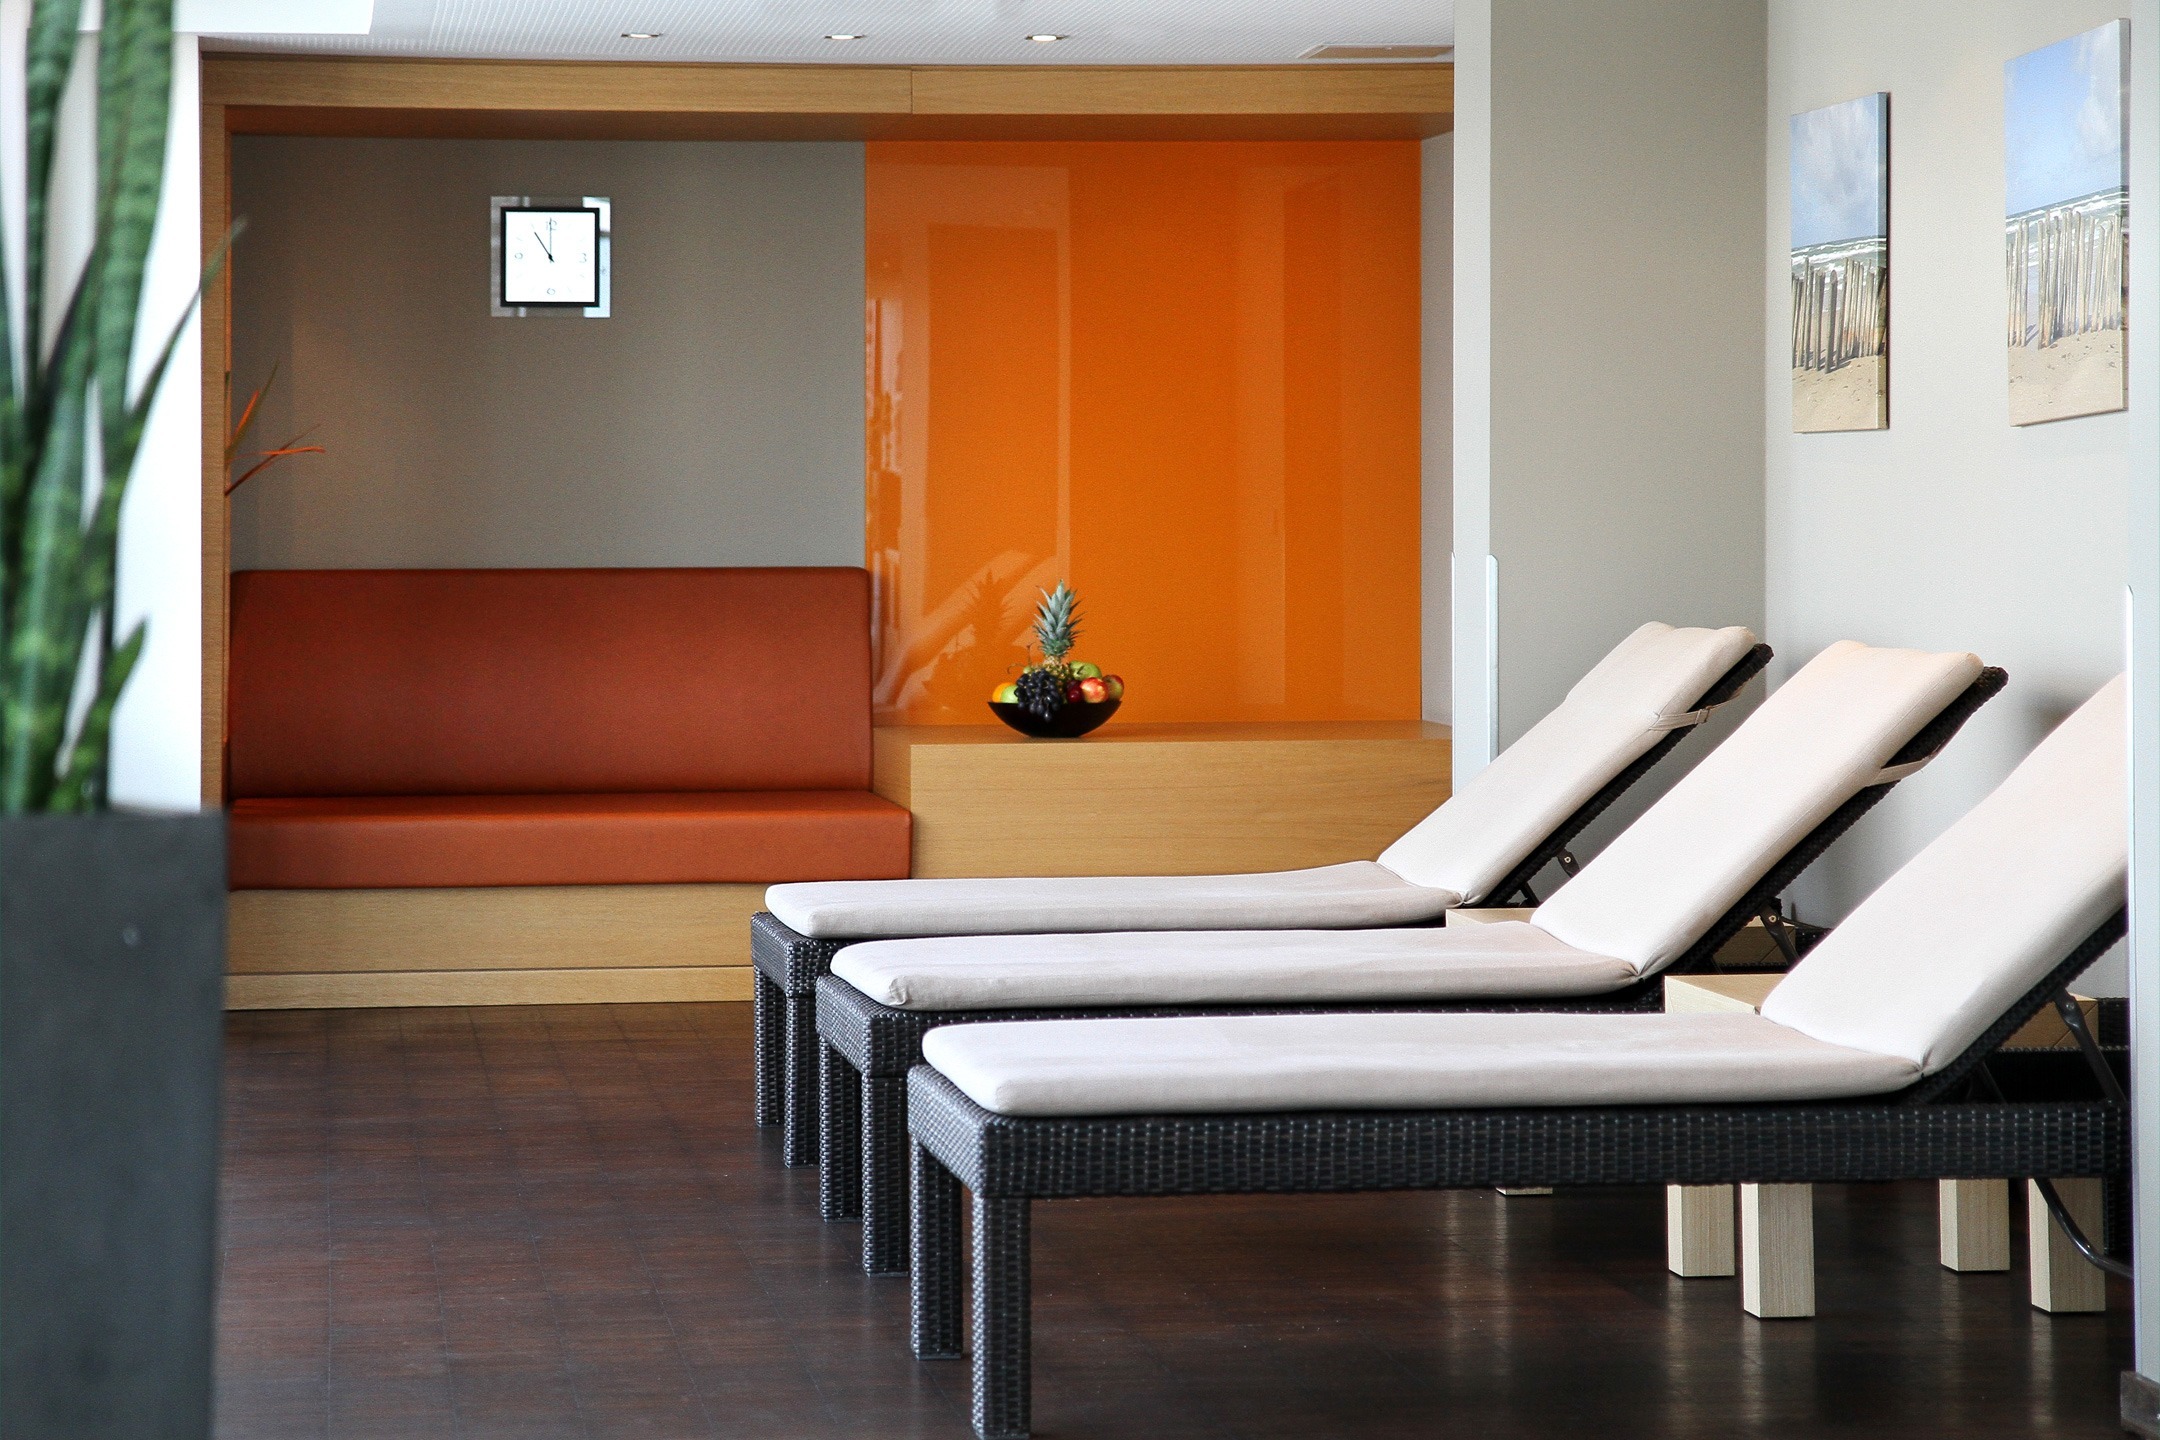 Relaxation area of the wellness area of the ATLANTIC Hotel Kiel